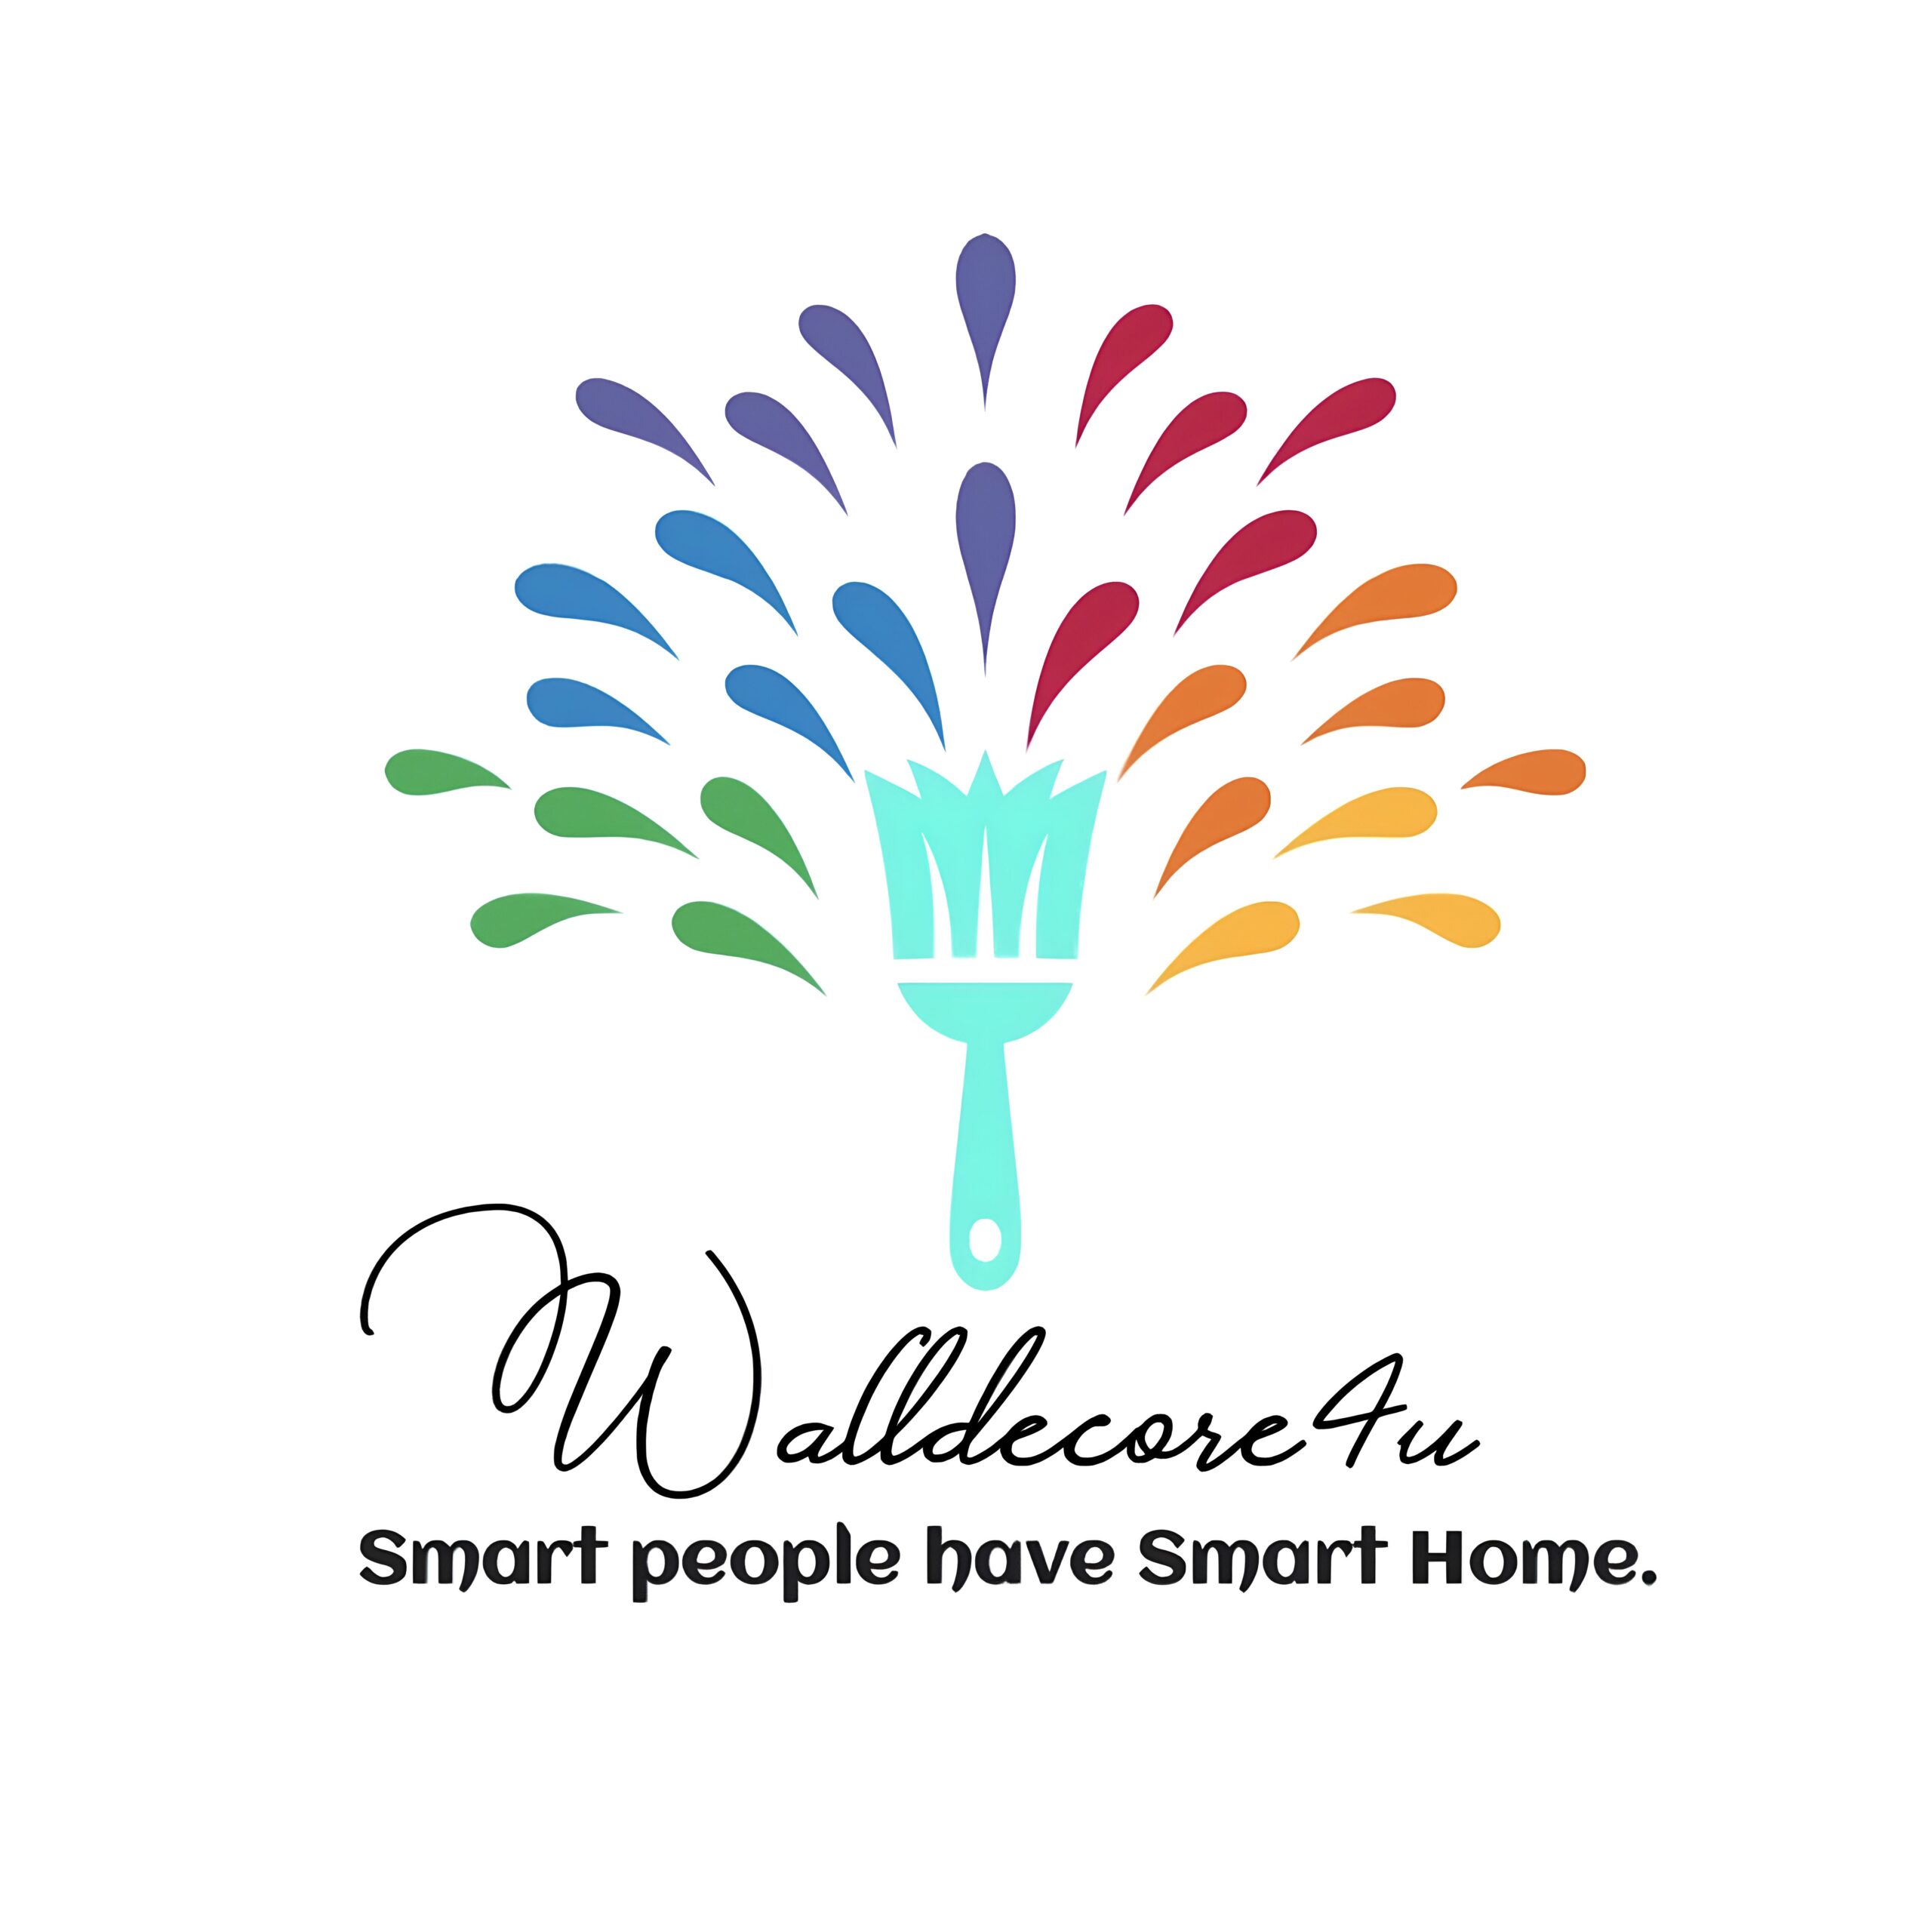 walldecore4u official logo https://walldecore4u.com/